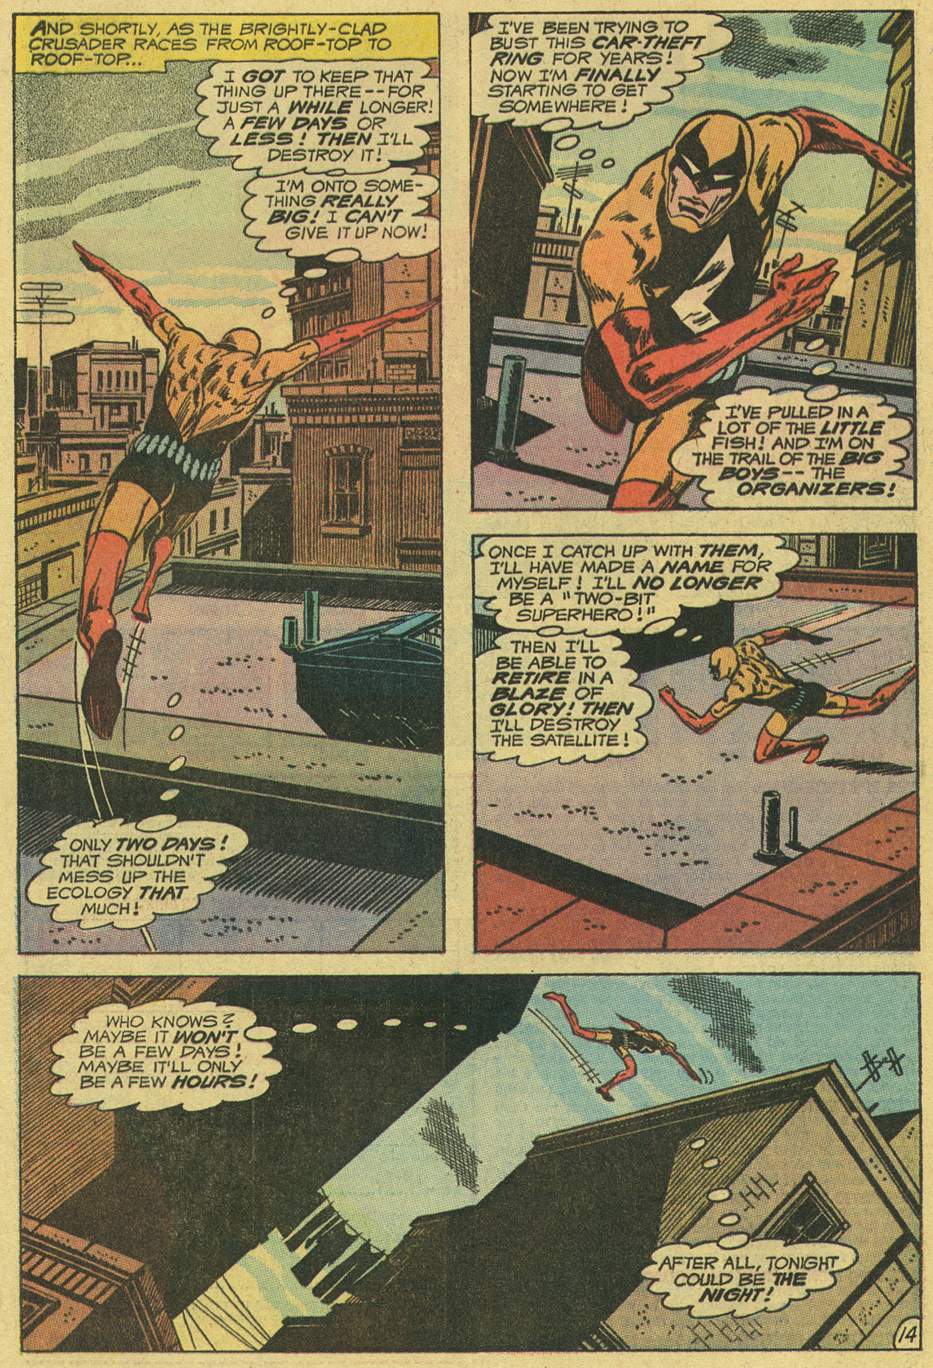 Aquaman #56 (1971) by Steve Skeates, Jim Aparo, and Dick Giordano